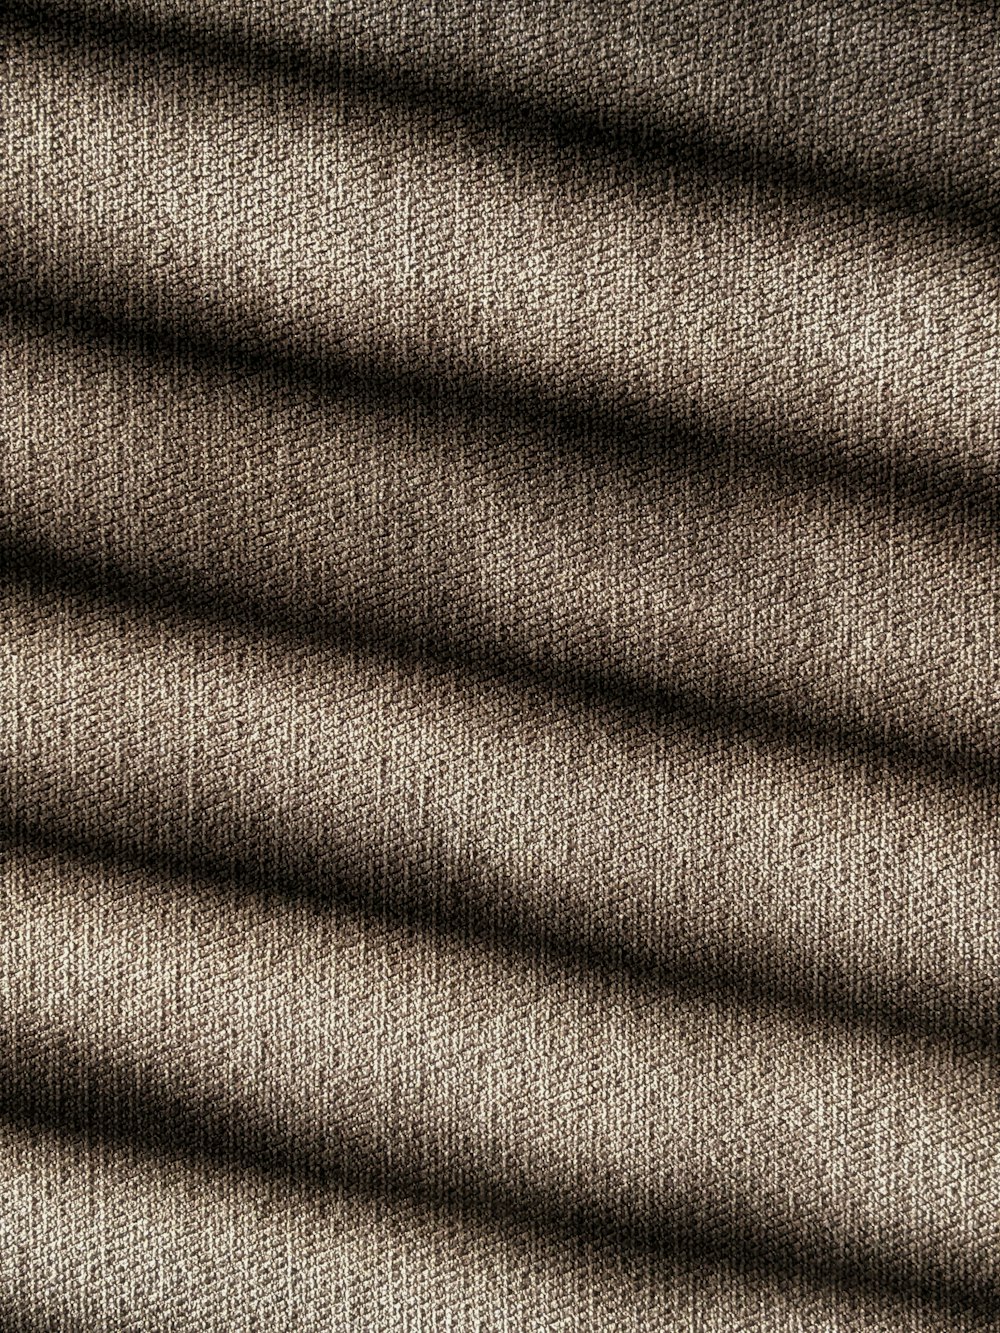 brown and black stripe textile